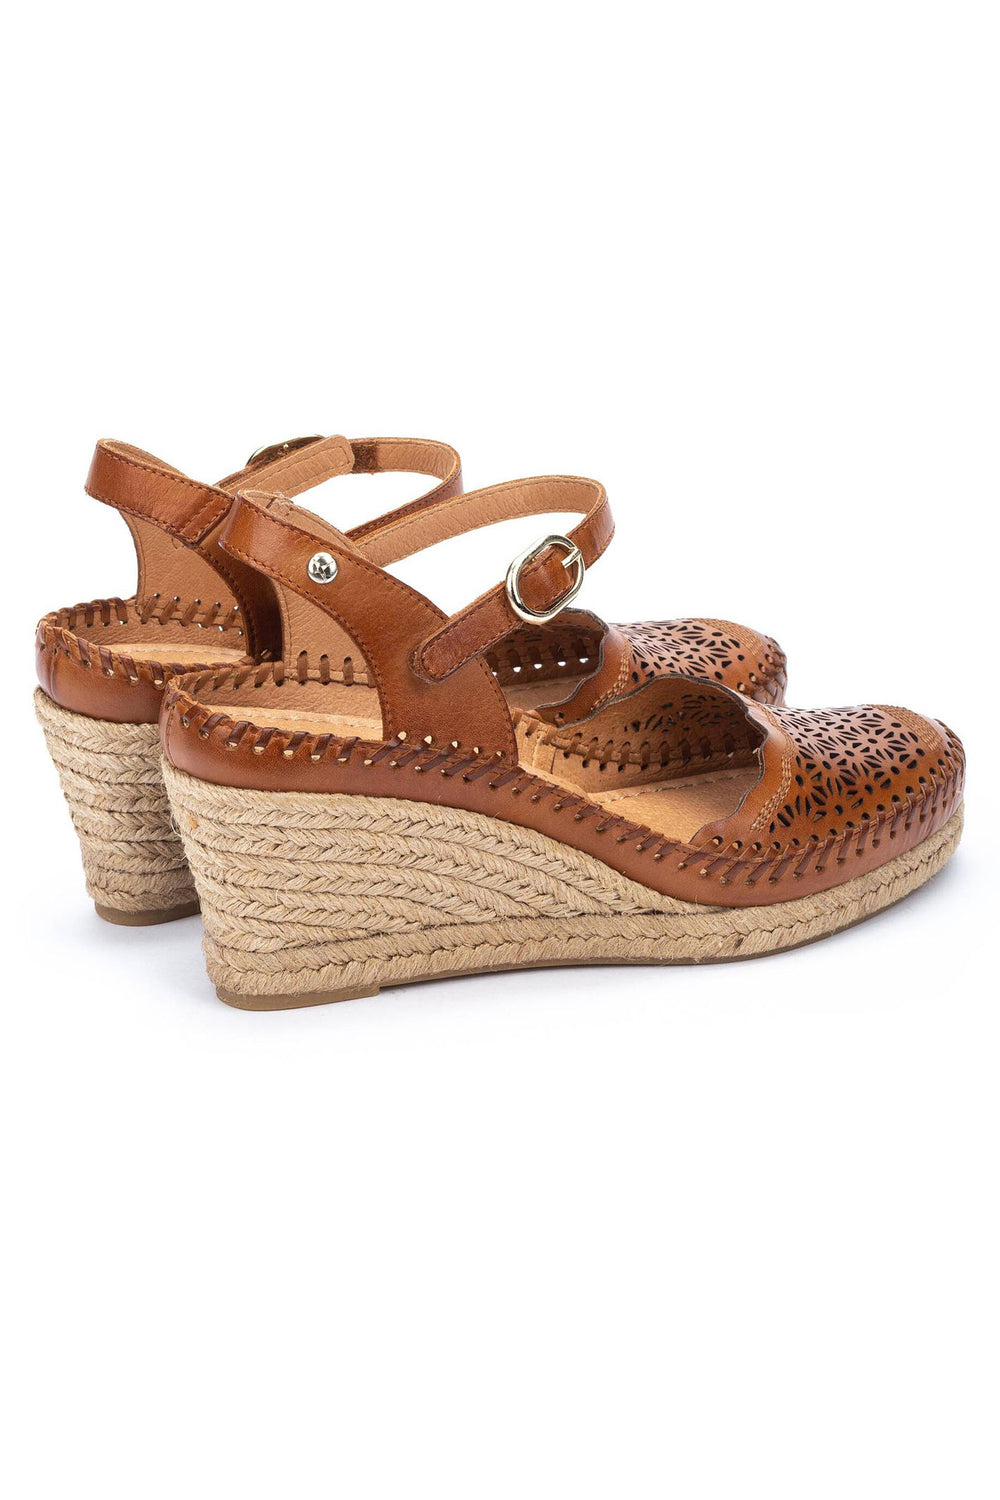 Pikolinos Vila W9Y-1508 Brandy Brown Leather Sandal - Shirley Allum Boutique